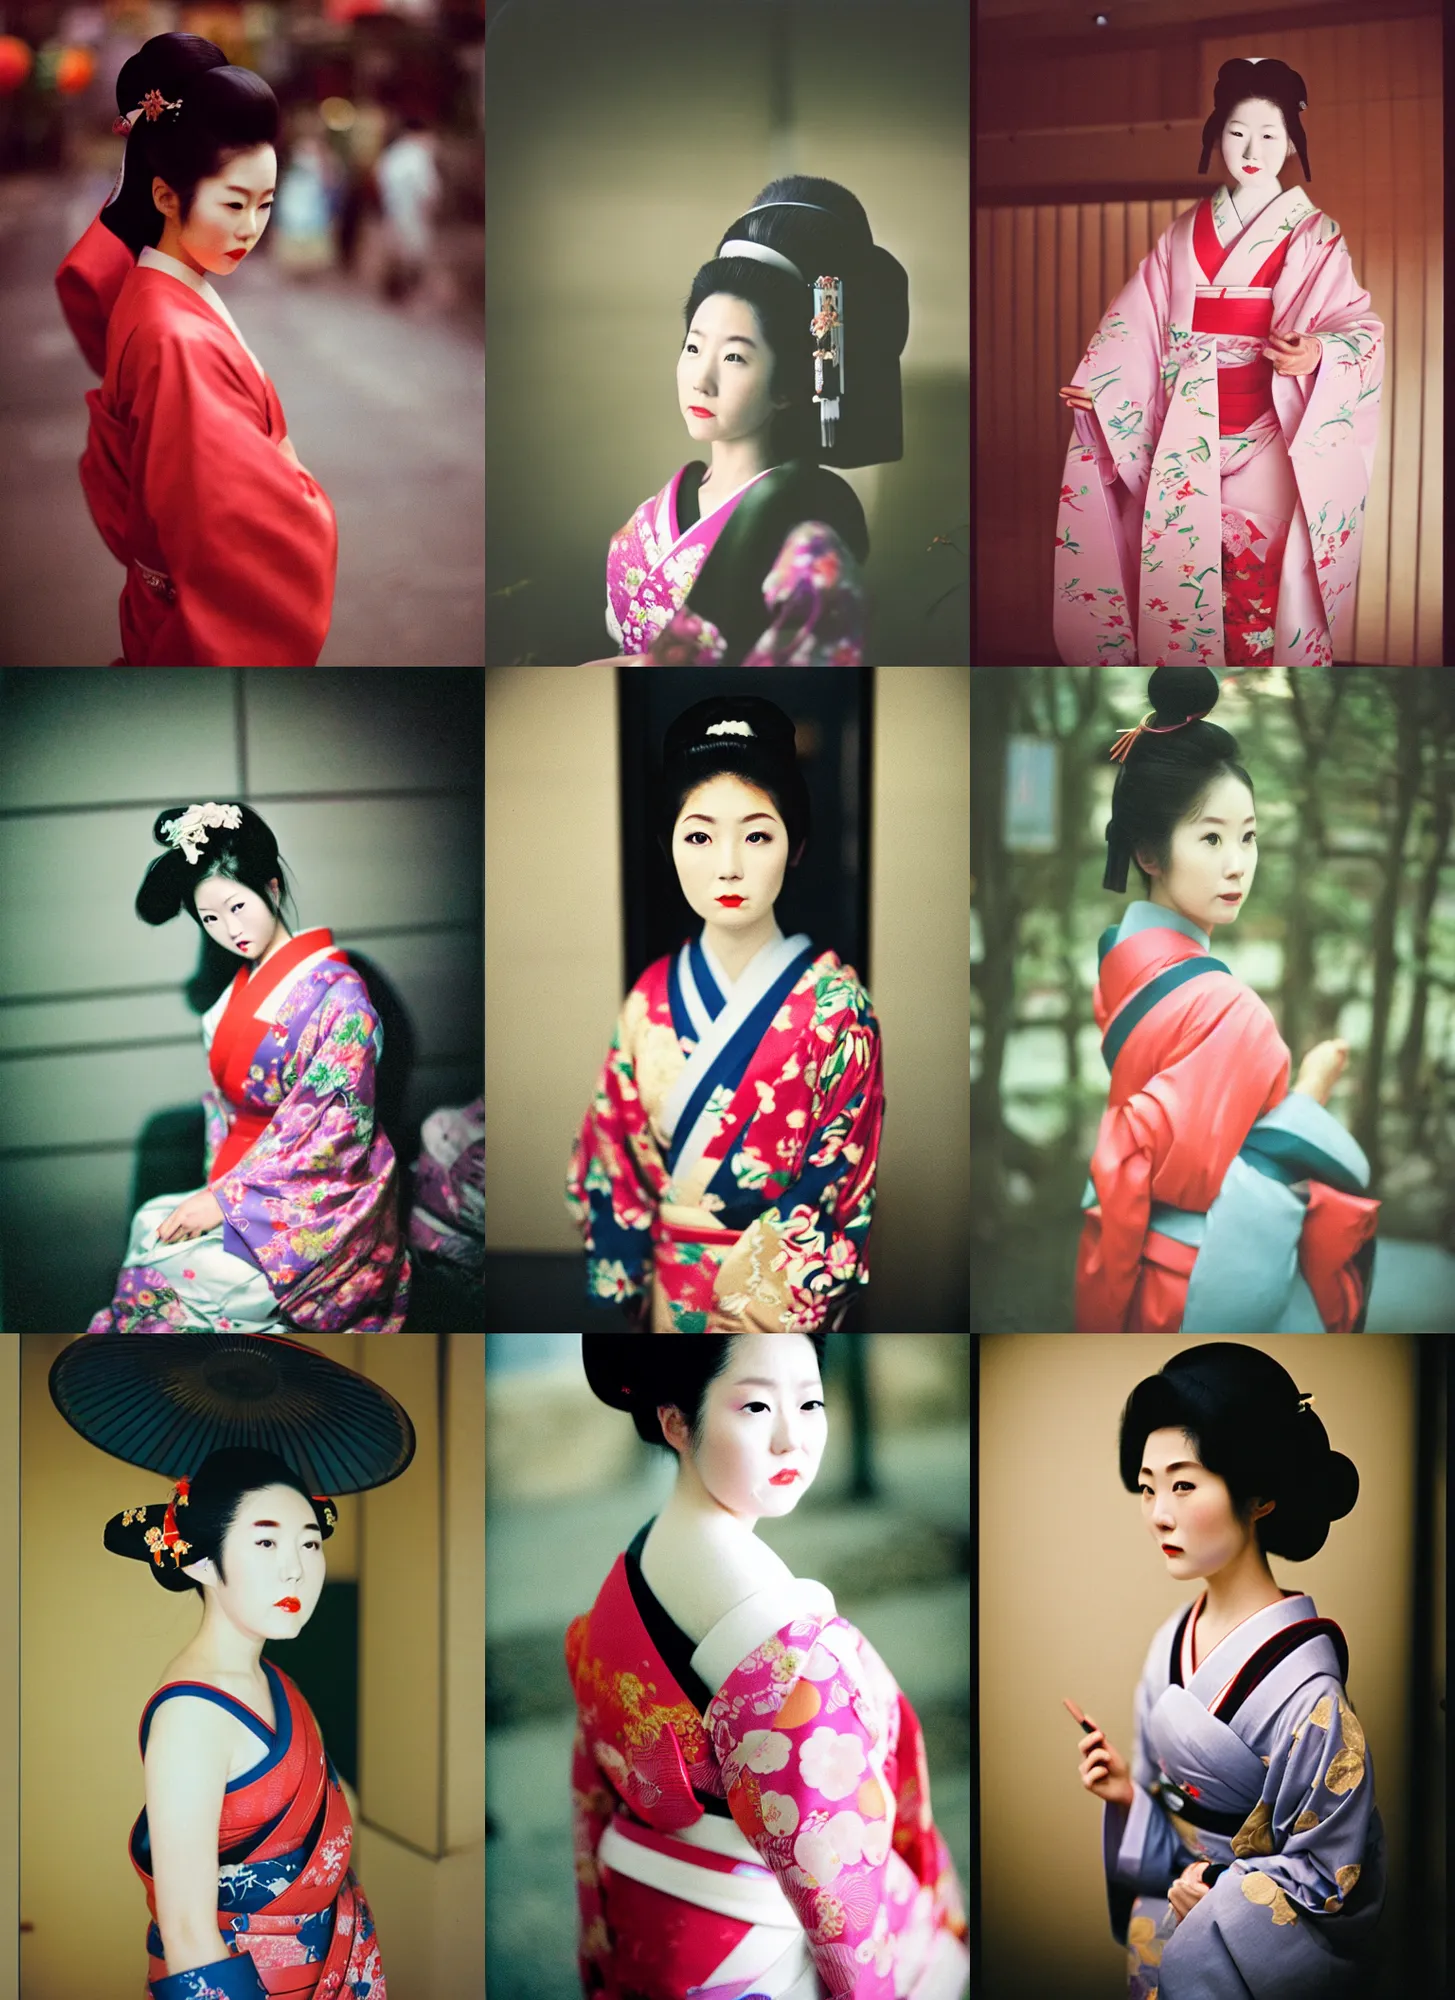 Prompt: Portrait Photograph of a Japanese Geisha Fuji Pro 1600